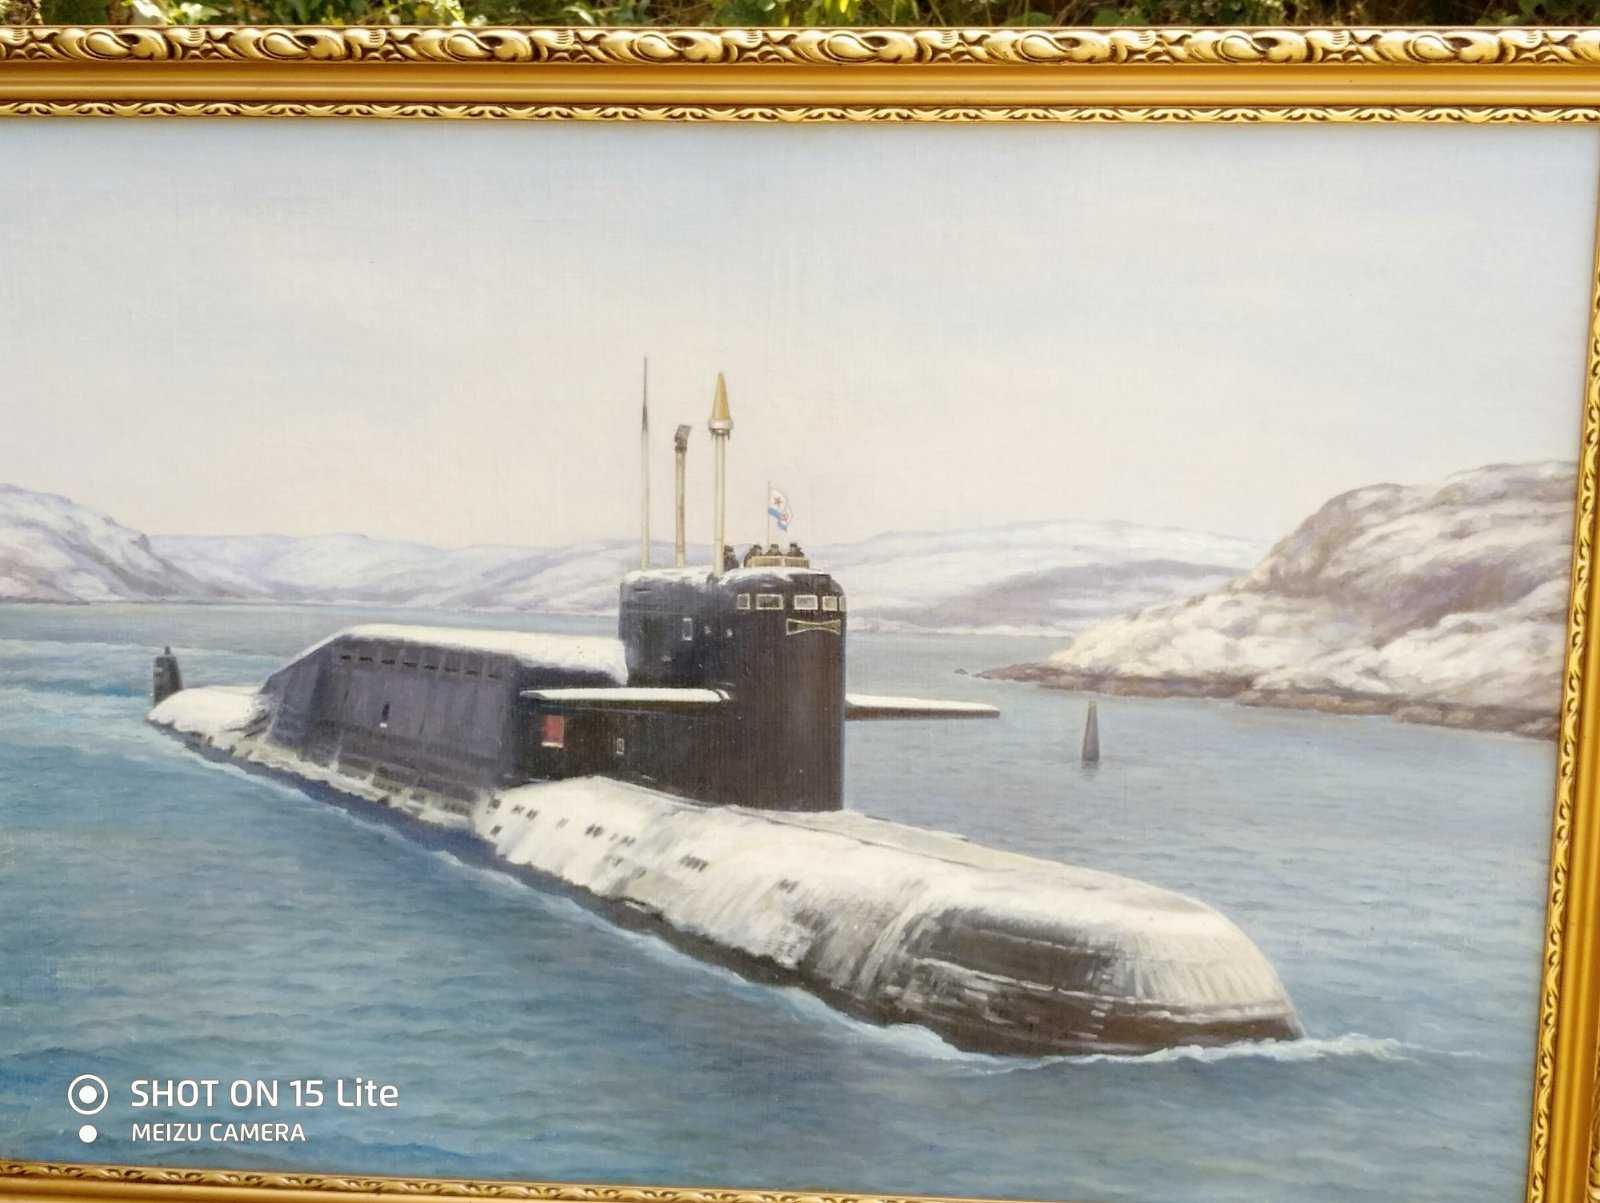 Картина подводная лодка